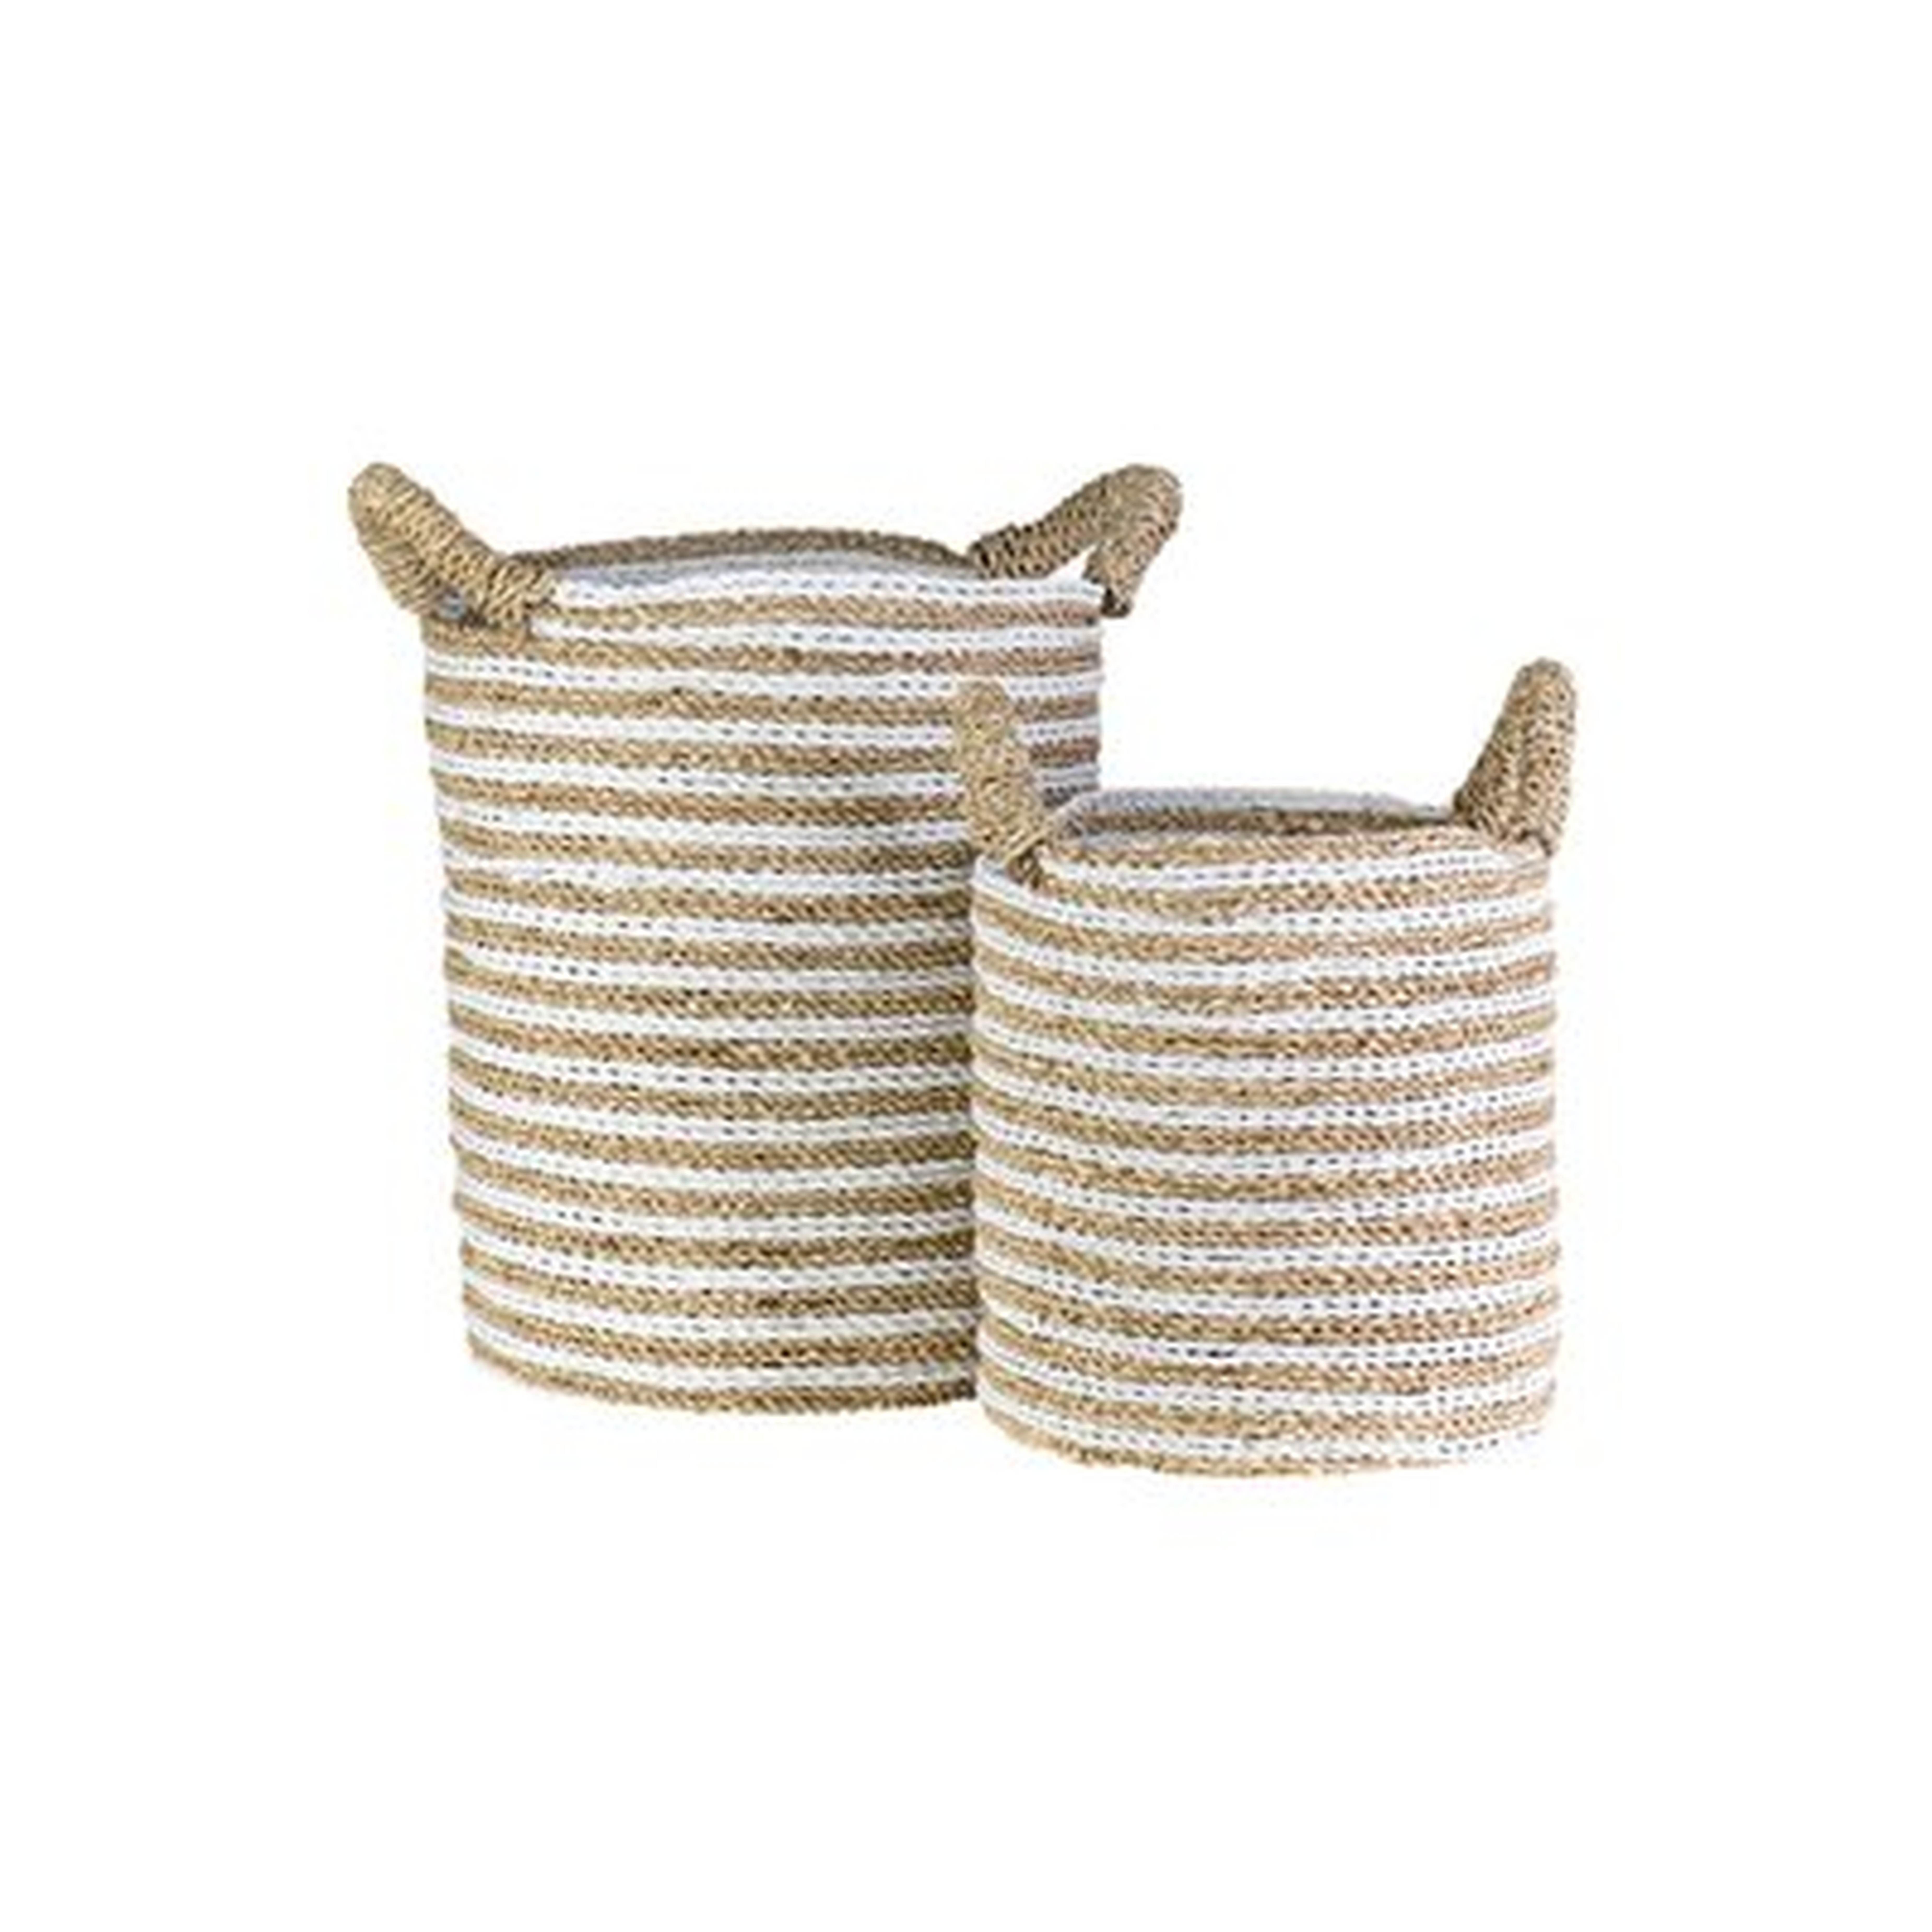 Woven Stripes Basket, Set Of 2, White And Brown - Wayfair